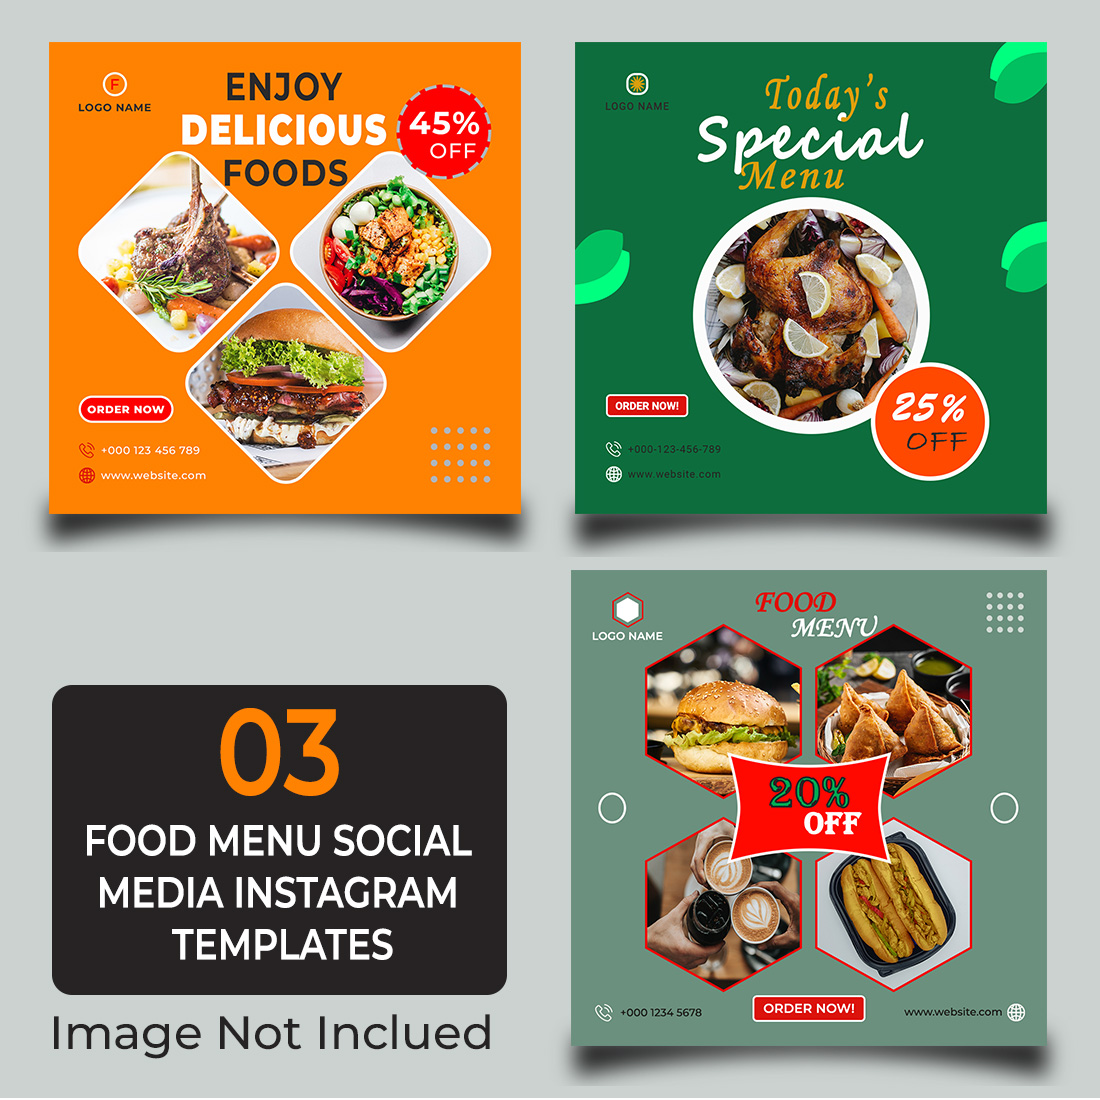 3 Food Menu Social Media Instagram Templates cover image.